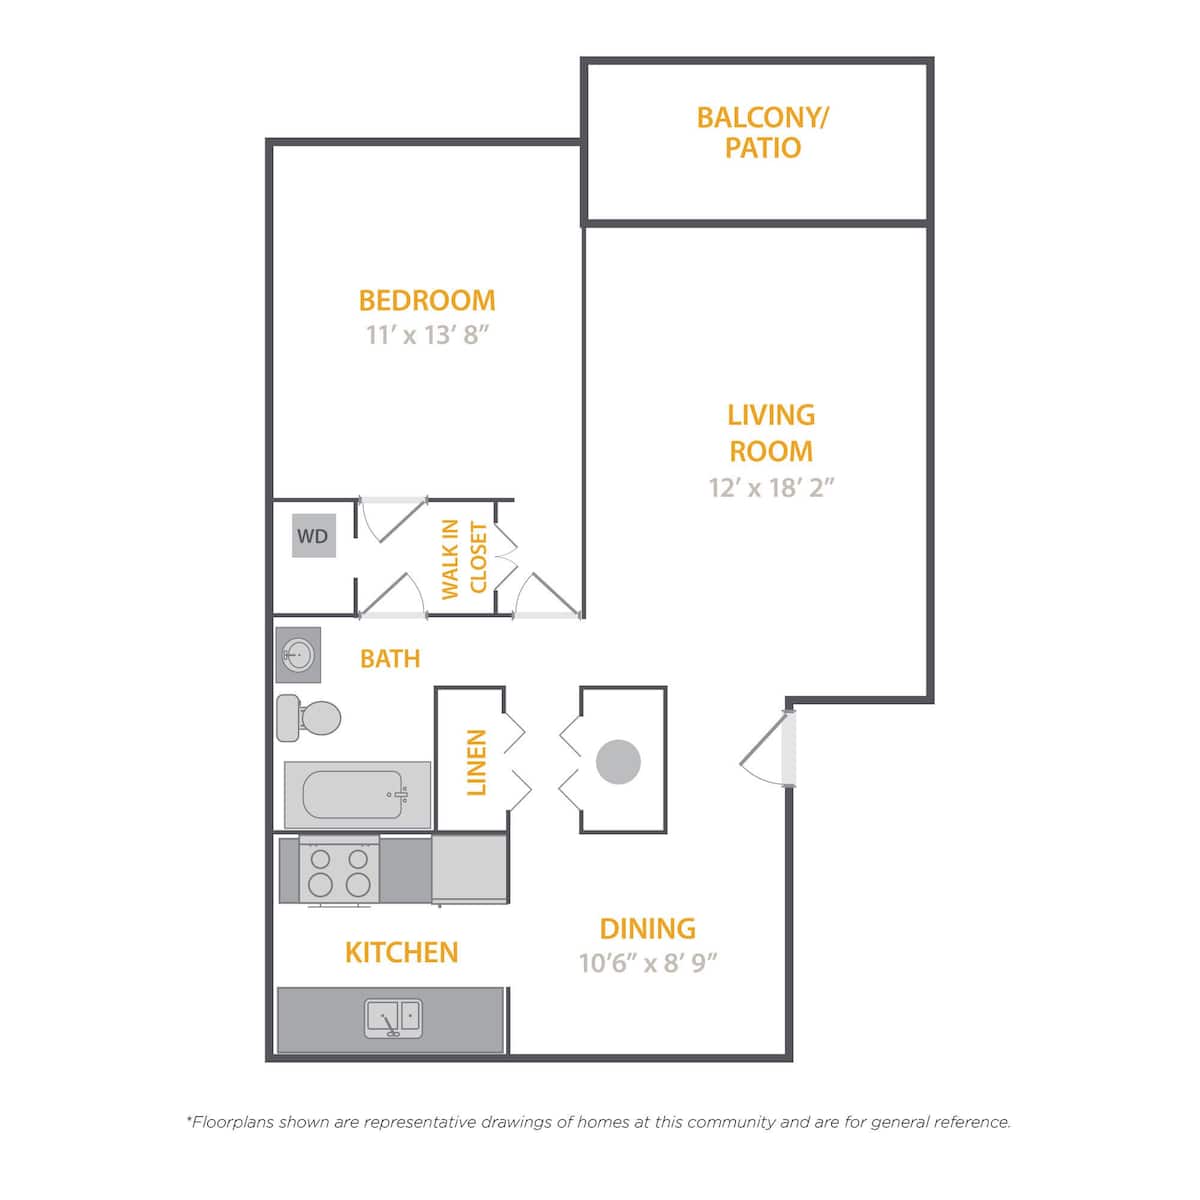 Floorplan diagram for Cascade, showing 1 bedroom